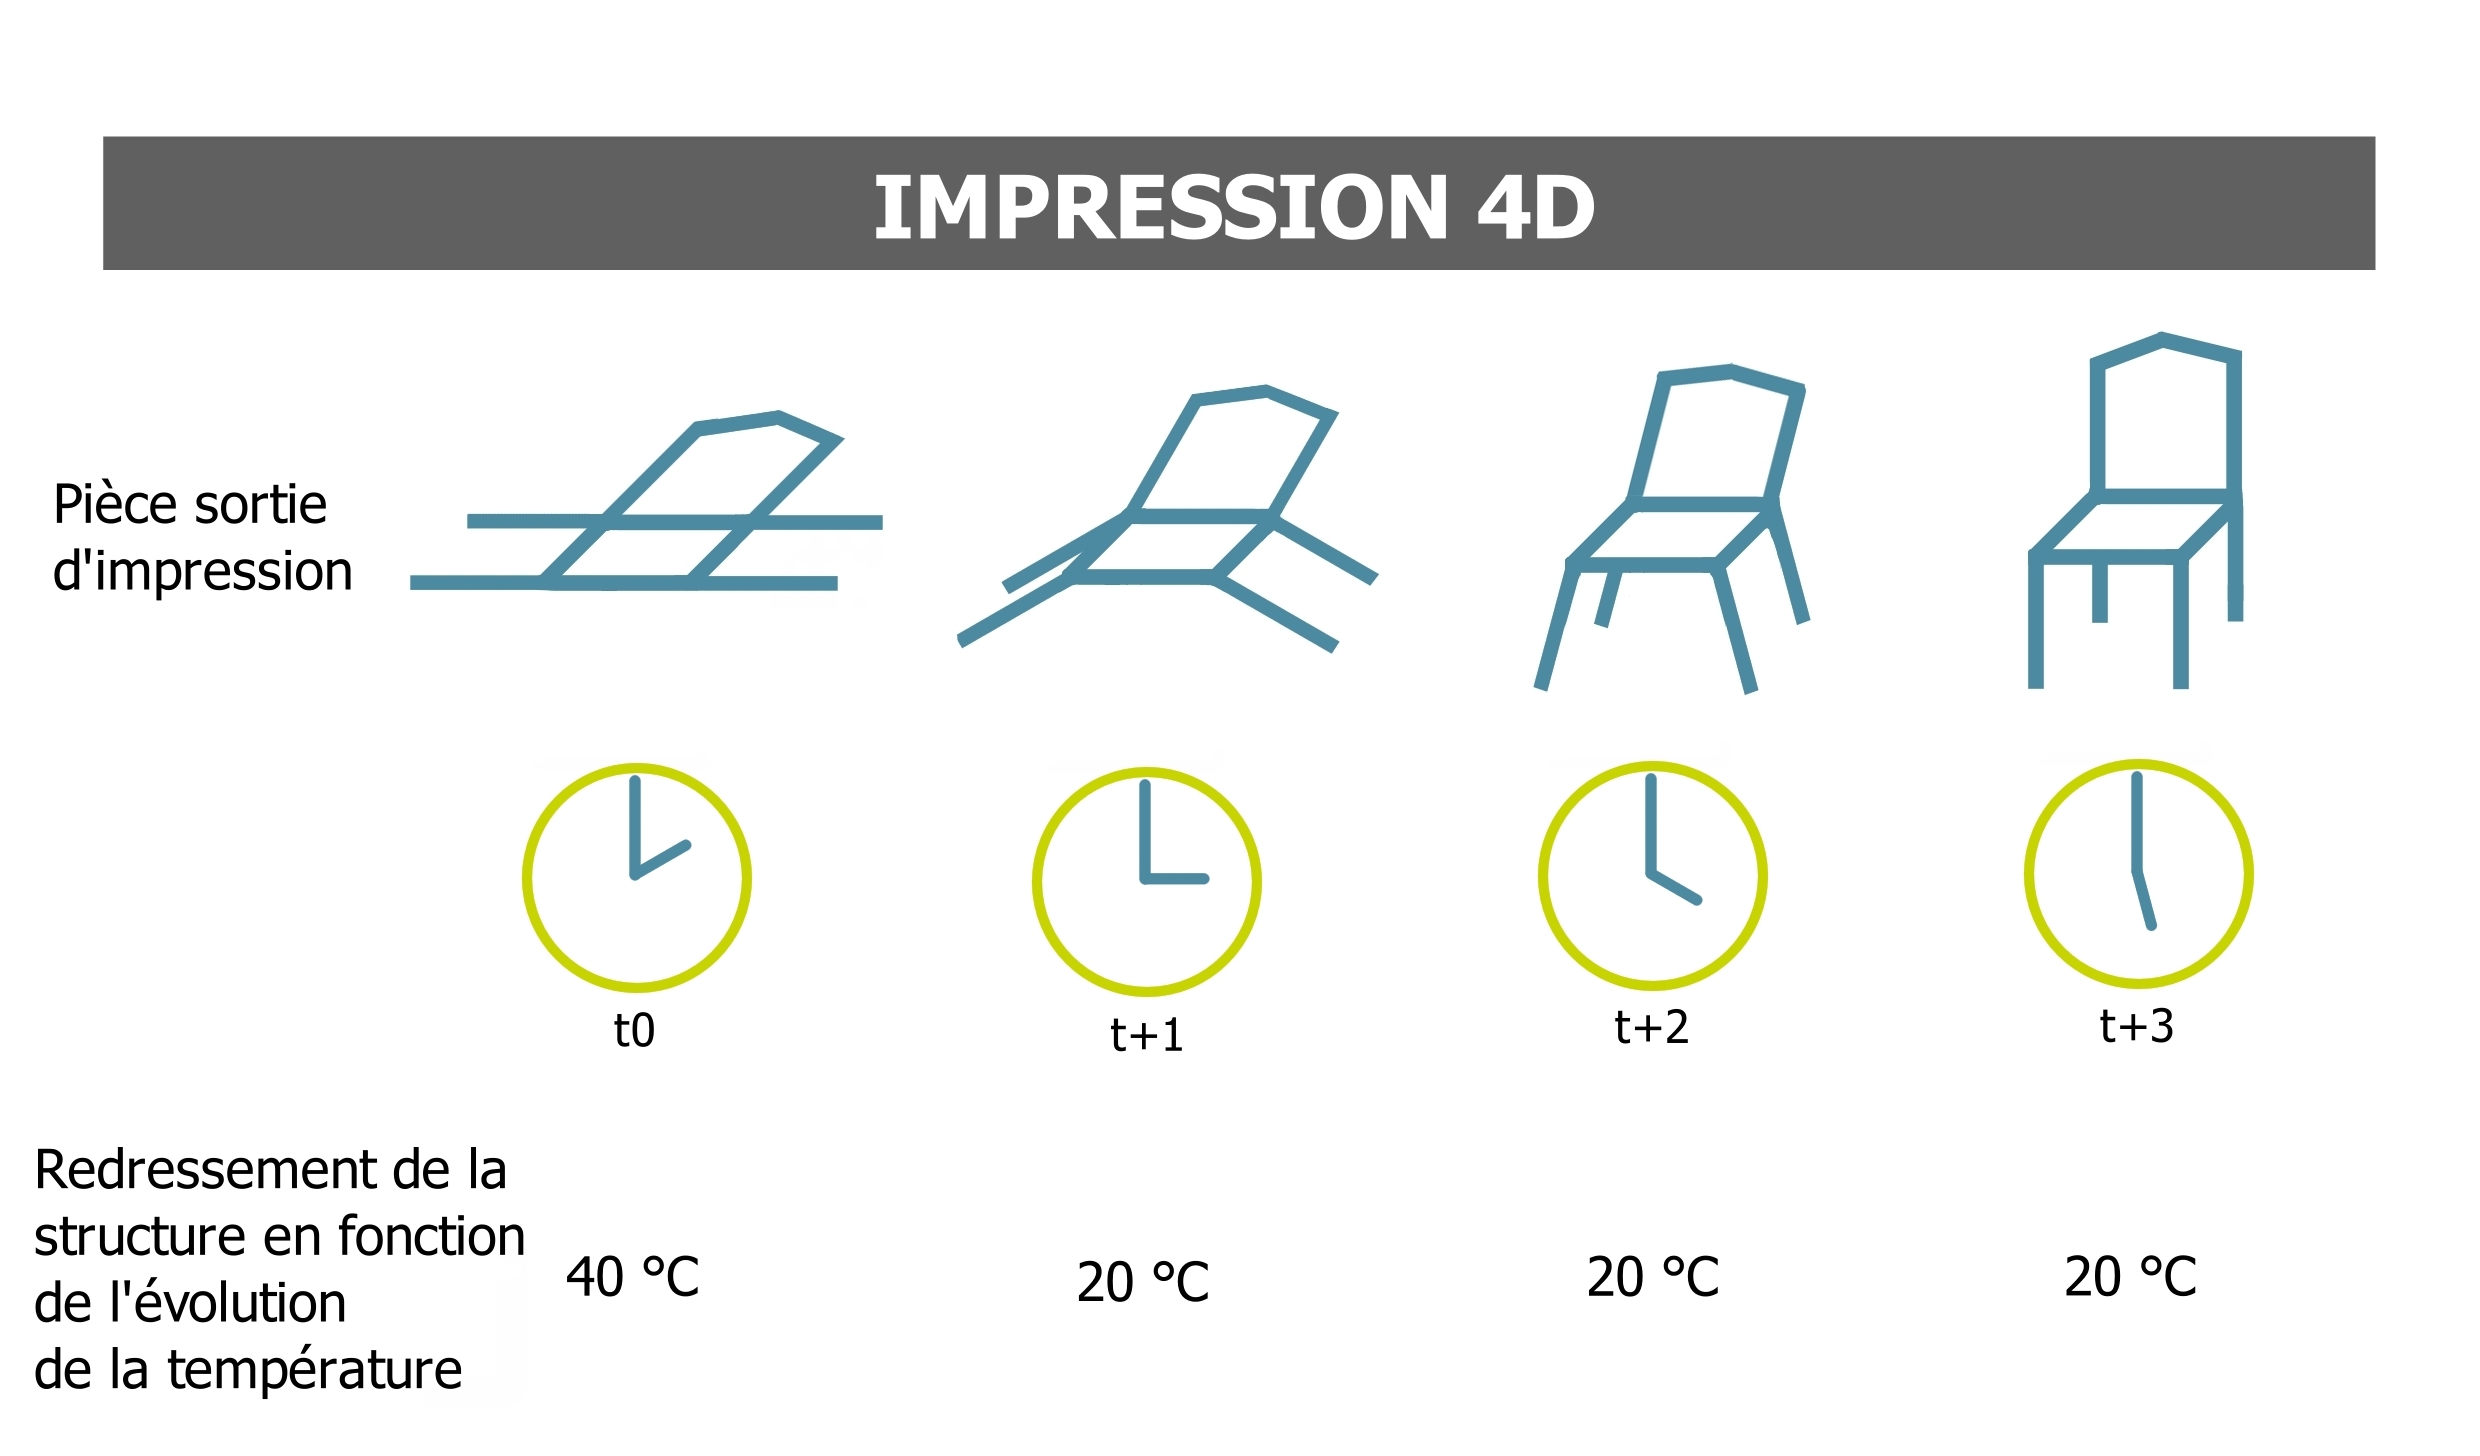 Fabrication Additive - Impression 4D